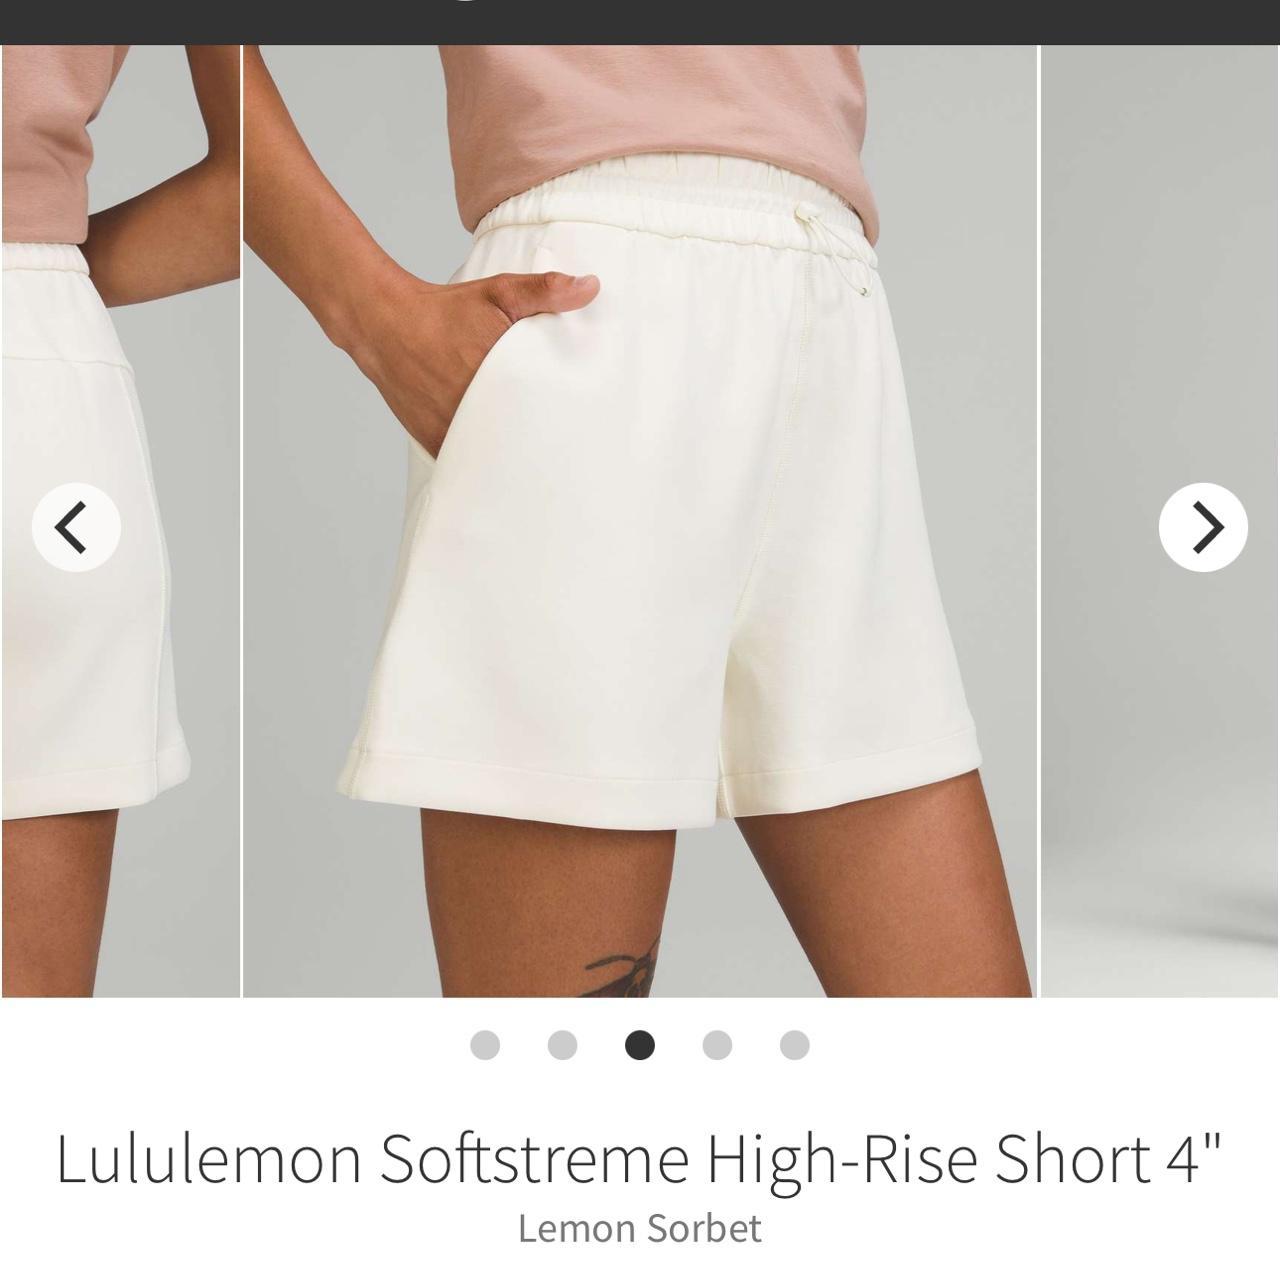 lululemon Softstreme High-Rise Short 4, Women's Fashion